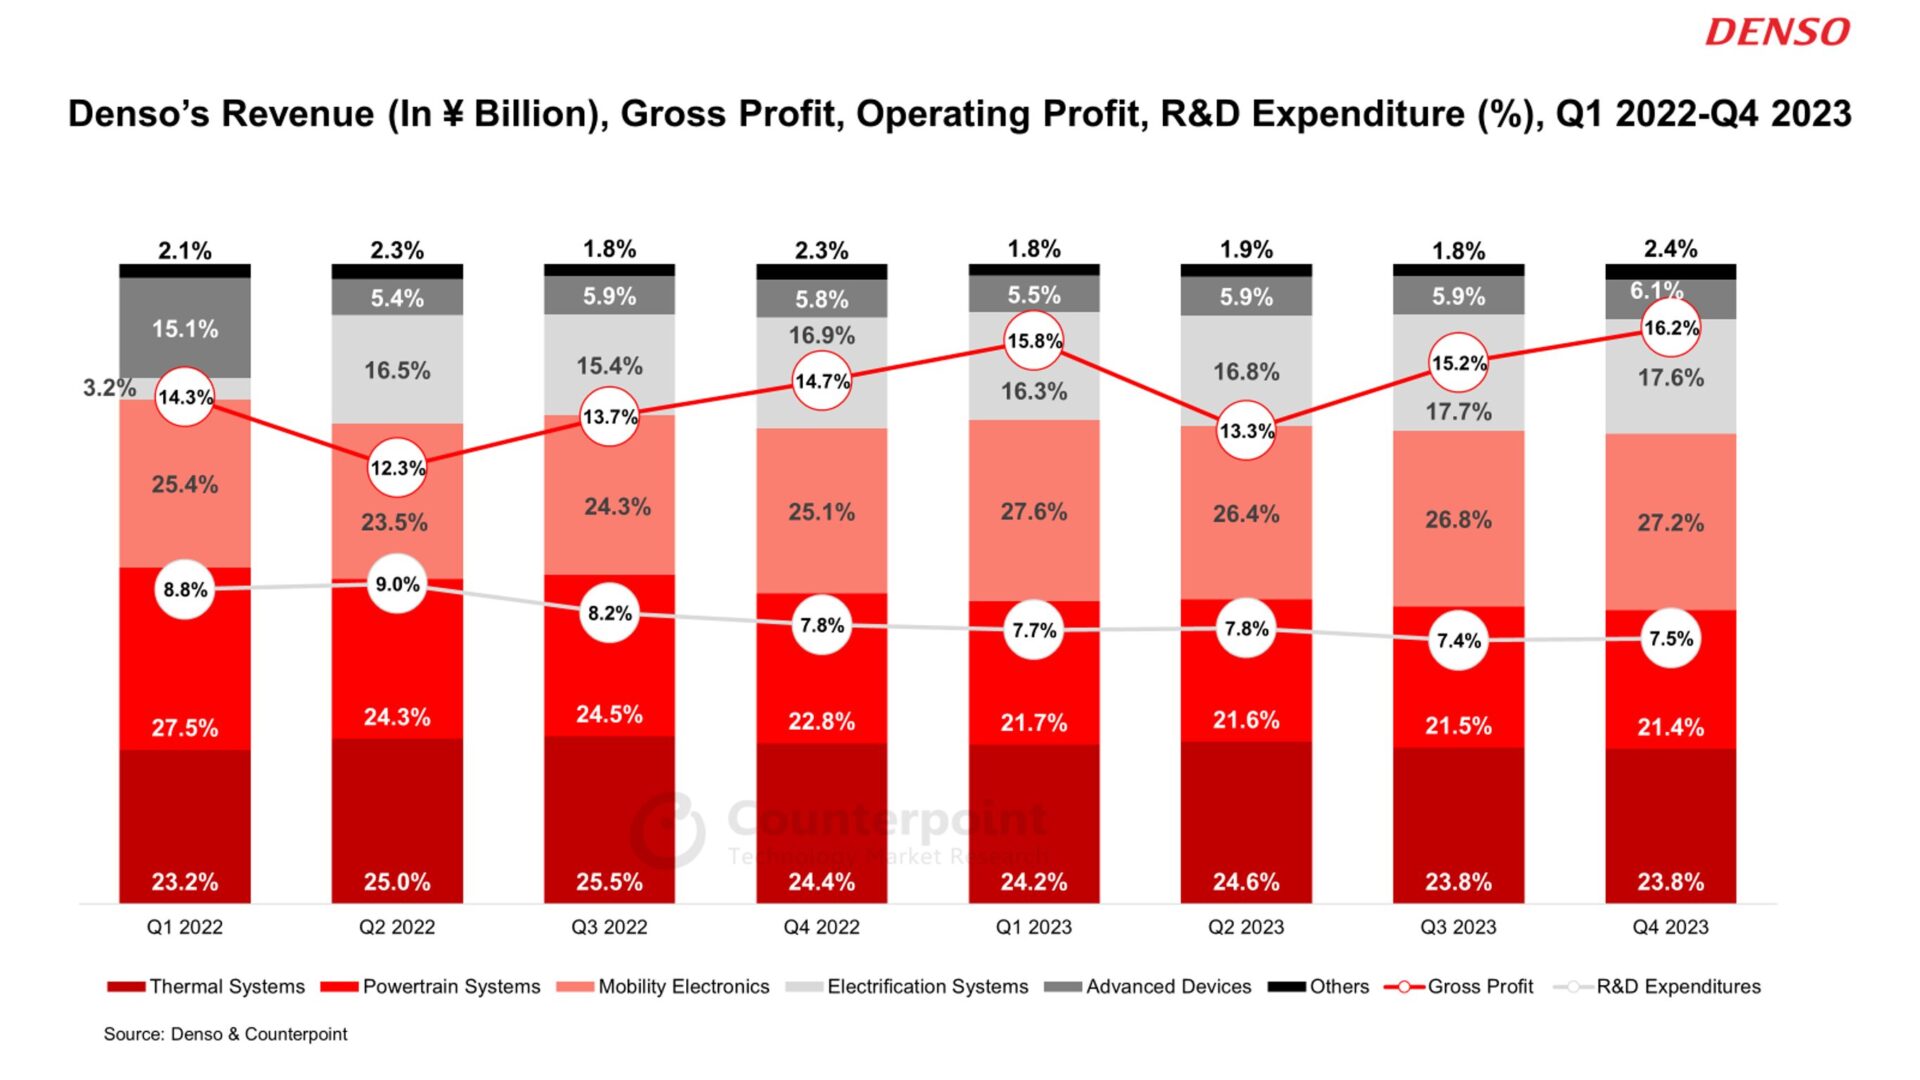 Denso's Revenue, Gross Profit, Operating Profit, R&D Expenditure, Q1 2022 - Q4 2023